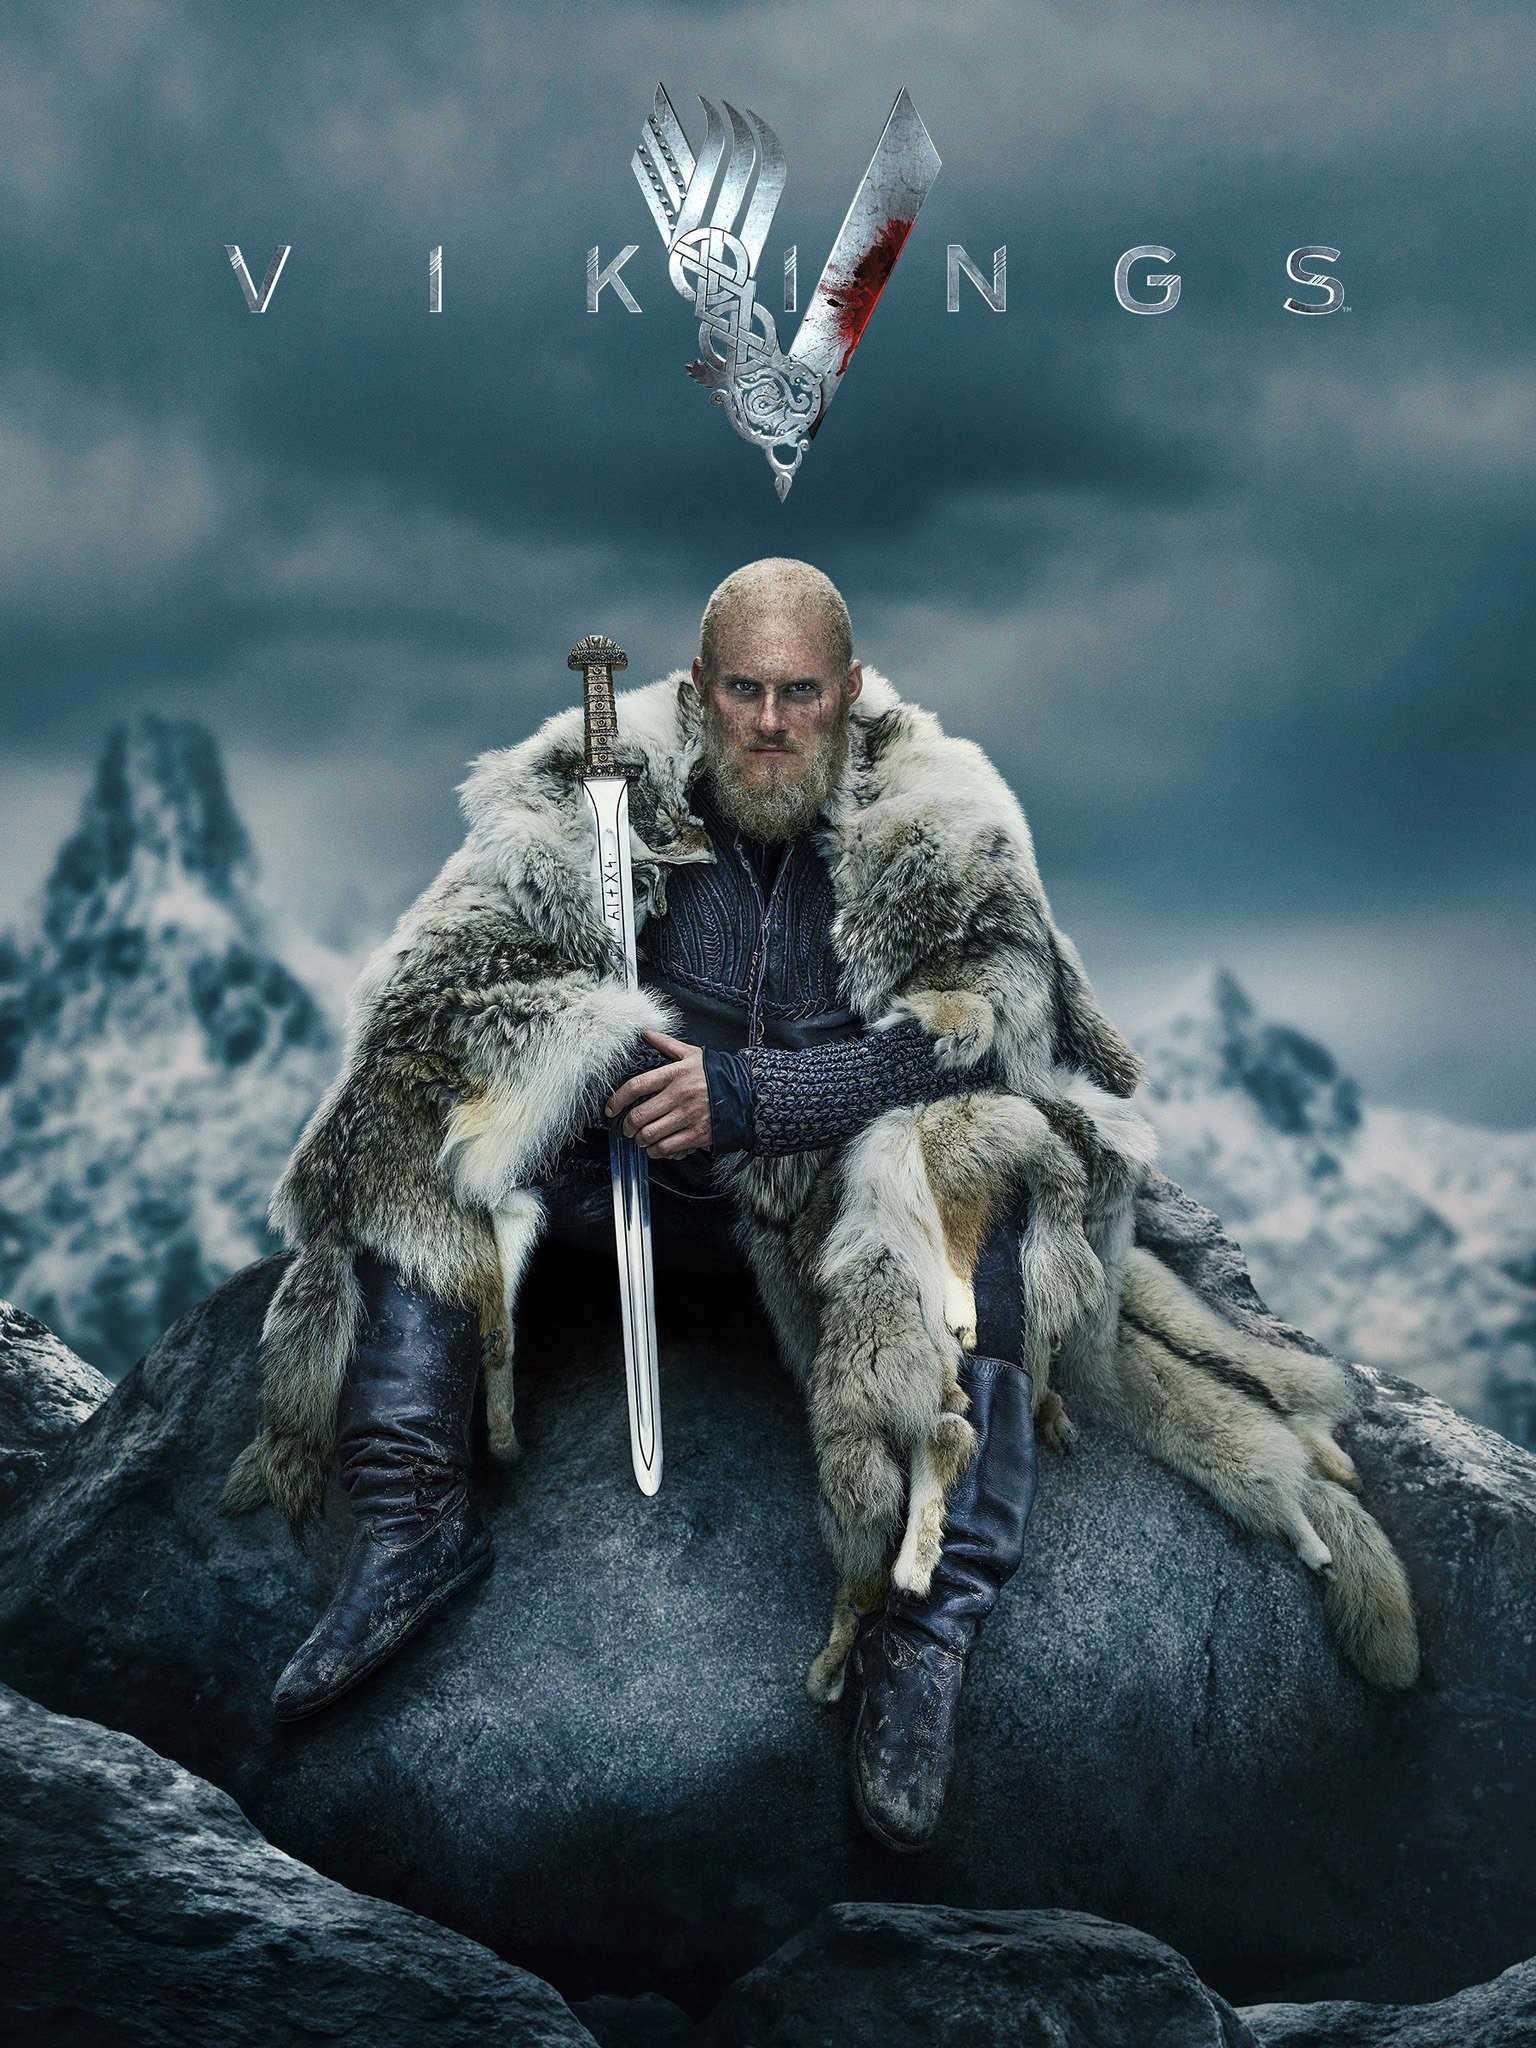 Viking Wolf (2022) - IMDb